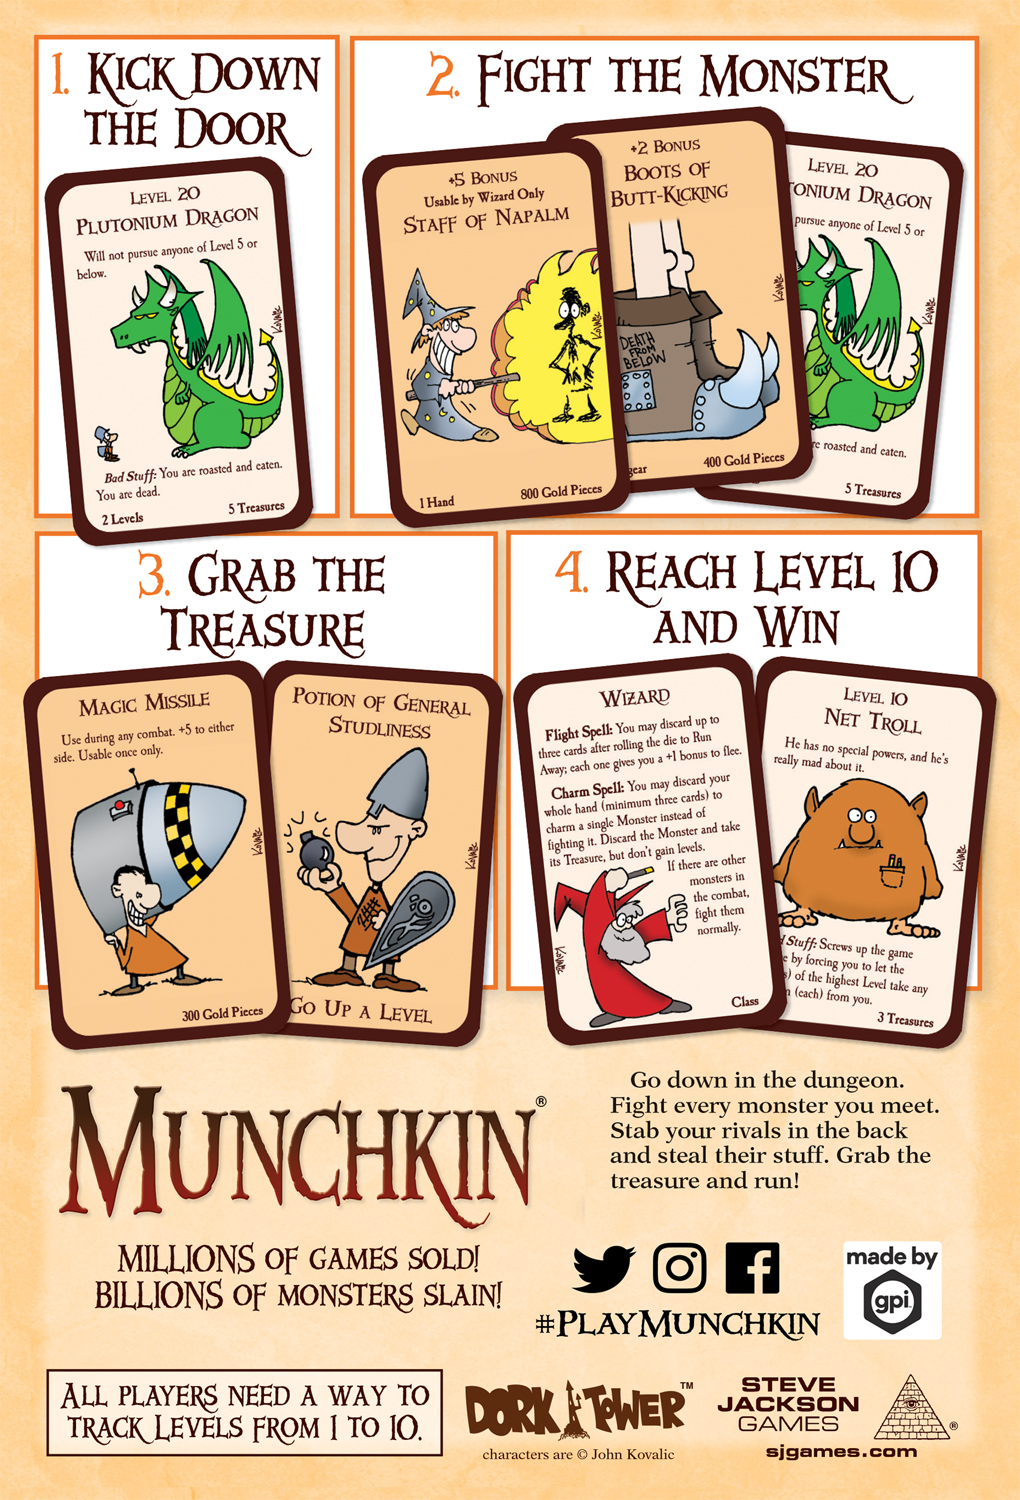 Munchkin Card Game Munchkin Enhancers Steve Jackson Games Expansion Pack Deck 